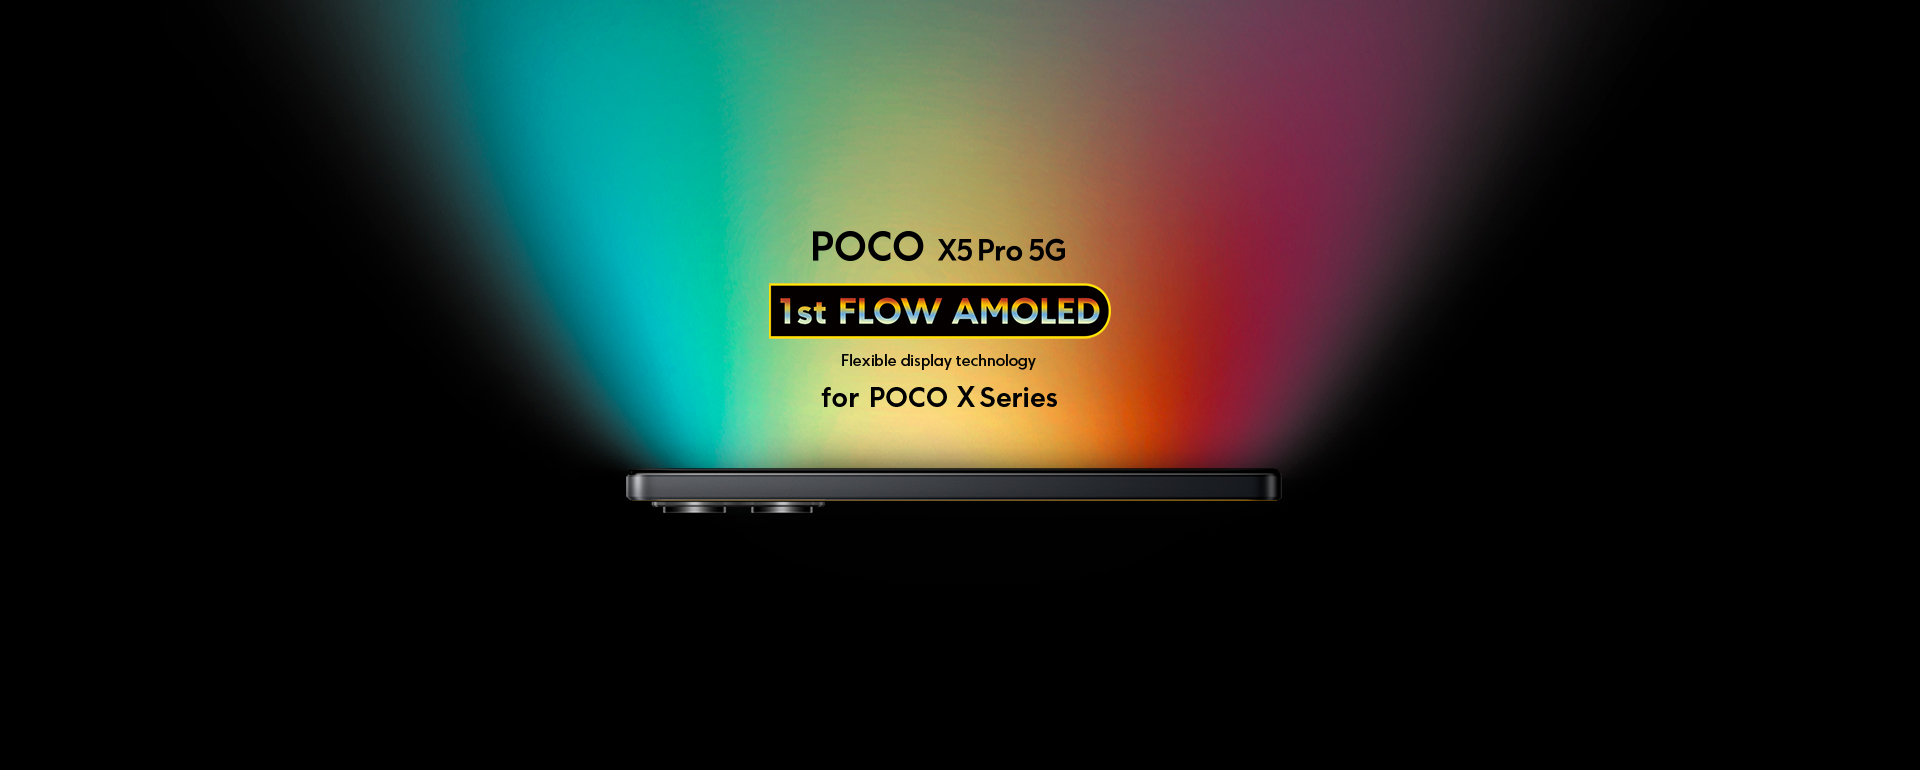 POCO X5 Pro 5G Flexible display technology